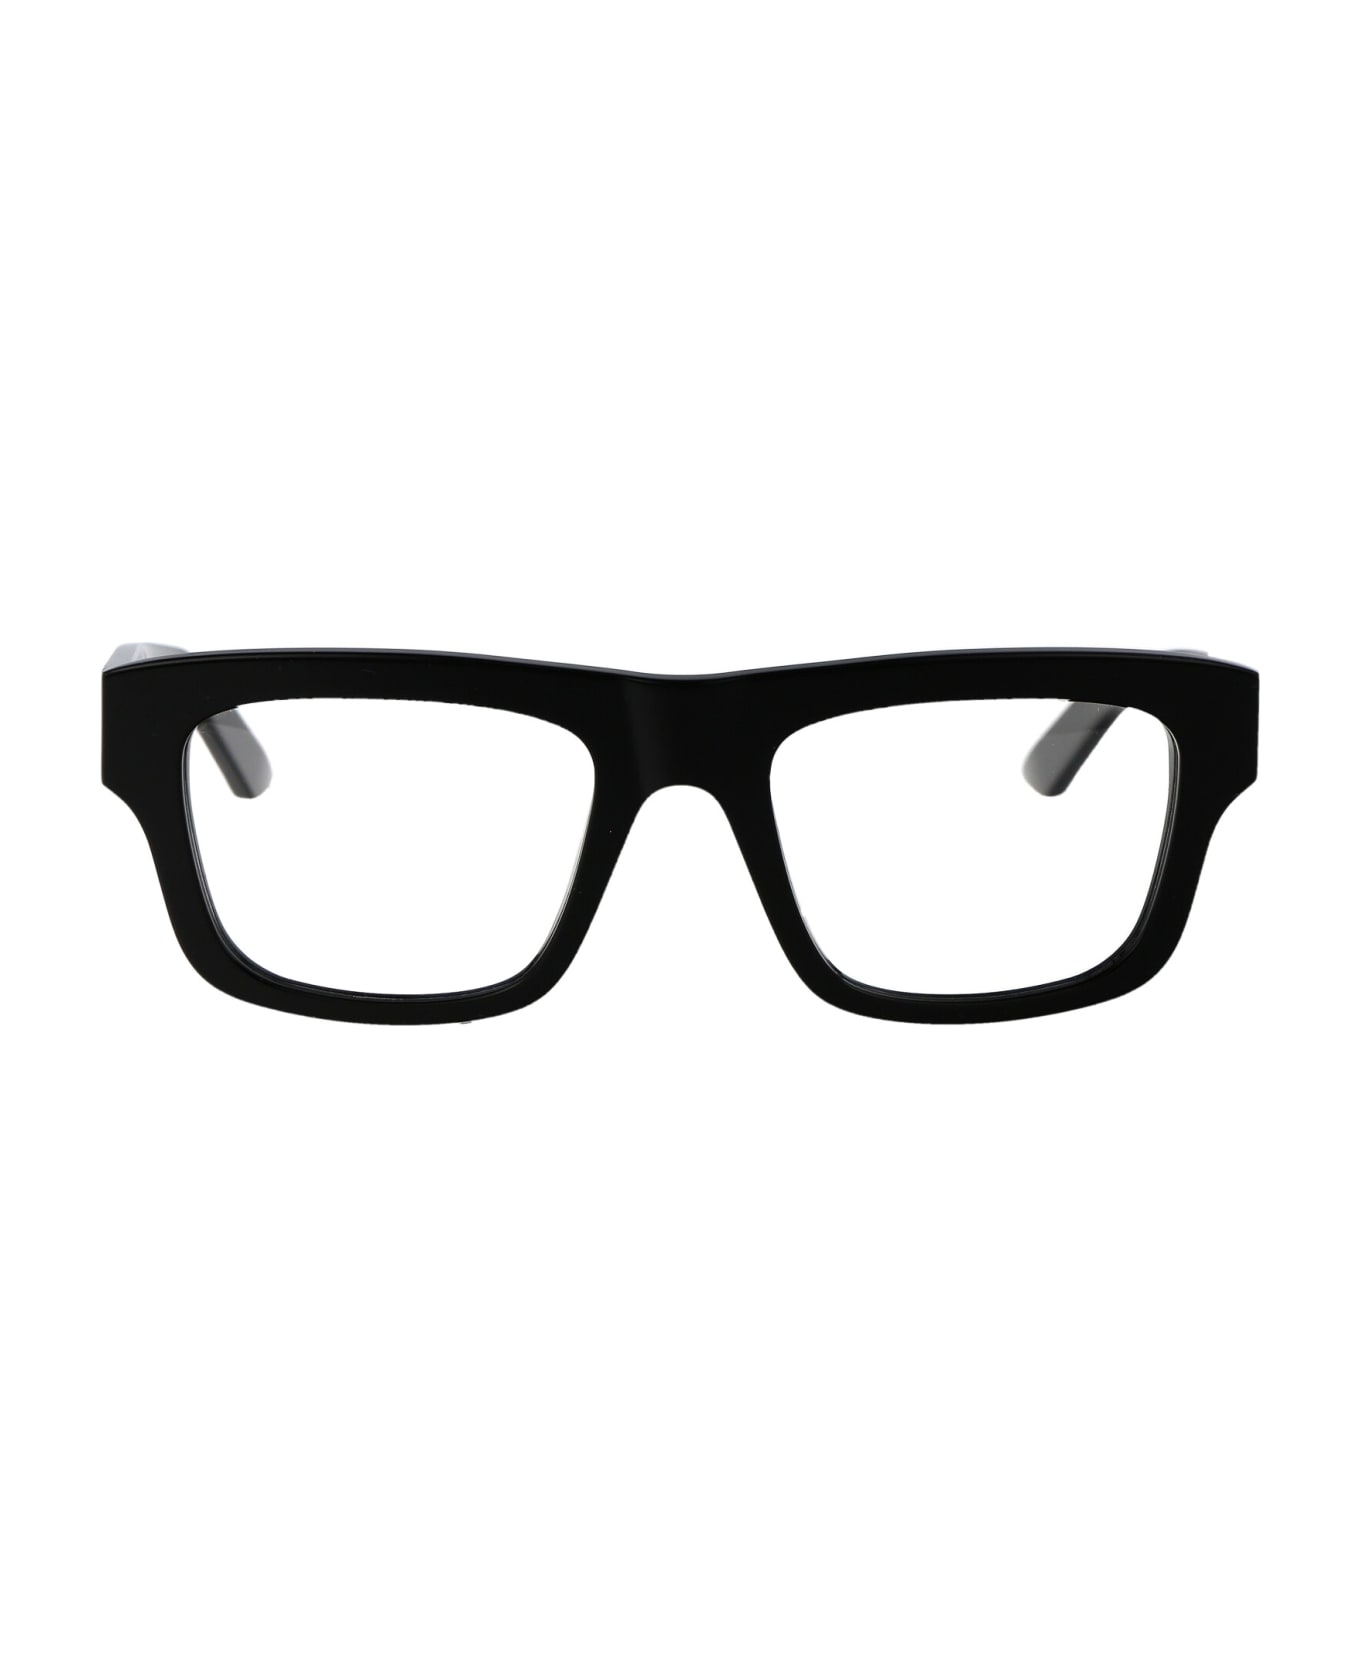 Alexander McQueen Eyewear Am0452o Glasses - 001 BLACK BLACK TRANSPARENT アイウェア